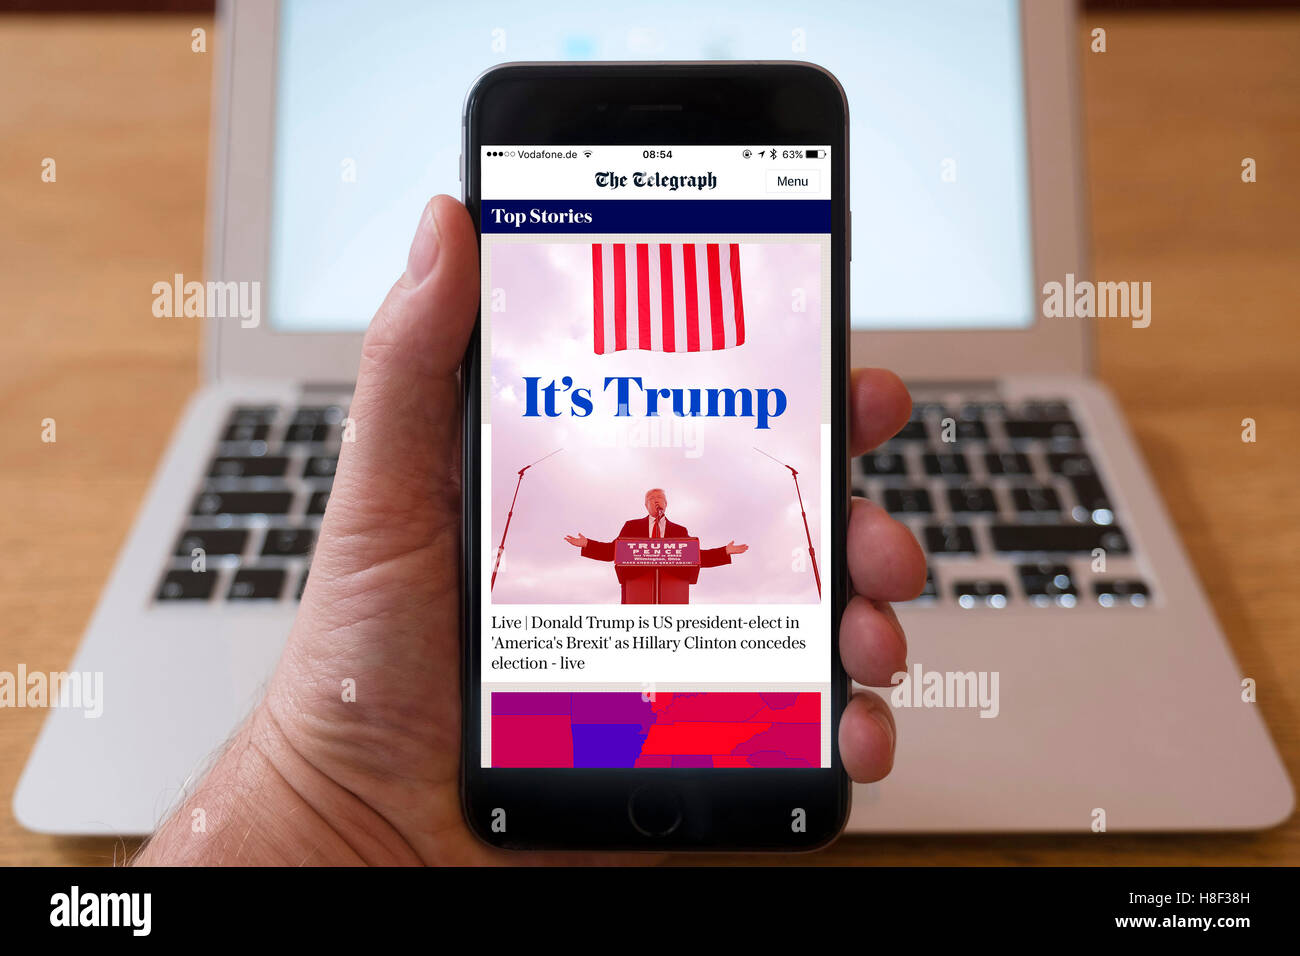 Detail des iPhone Smartphone zeigt Online-mobile Front-Page Schlagzeile vom The Telegraph nach Donald Trump vi Stockfoto